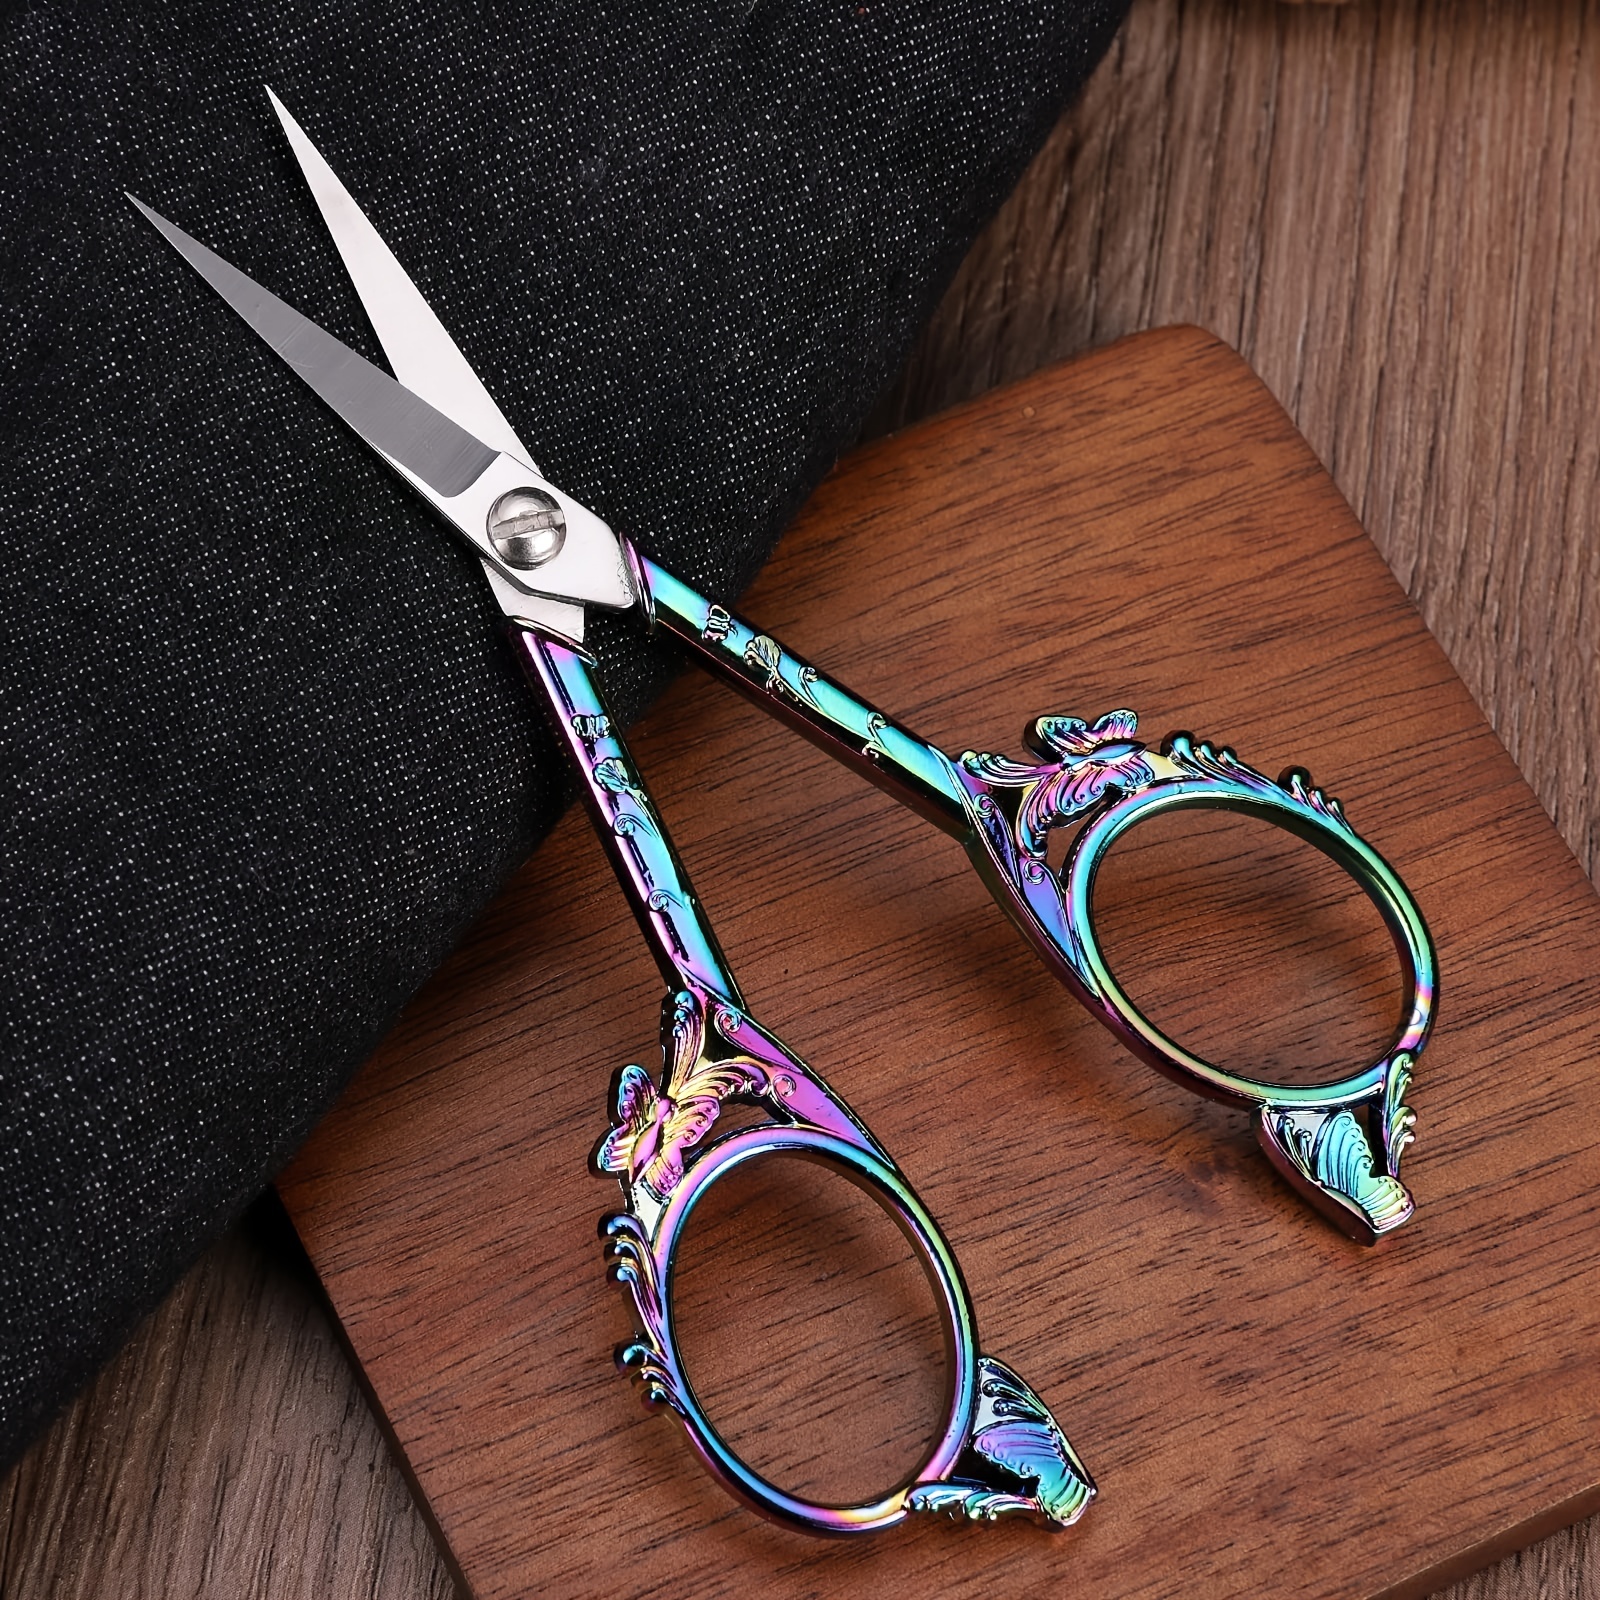 Little Scissors Small Sewing Scissors Stainless Steel Sharp Cross Stitch  Scissors DIY Tools Dressmaker Shears Scissors for Craft Embroidery  Needlework